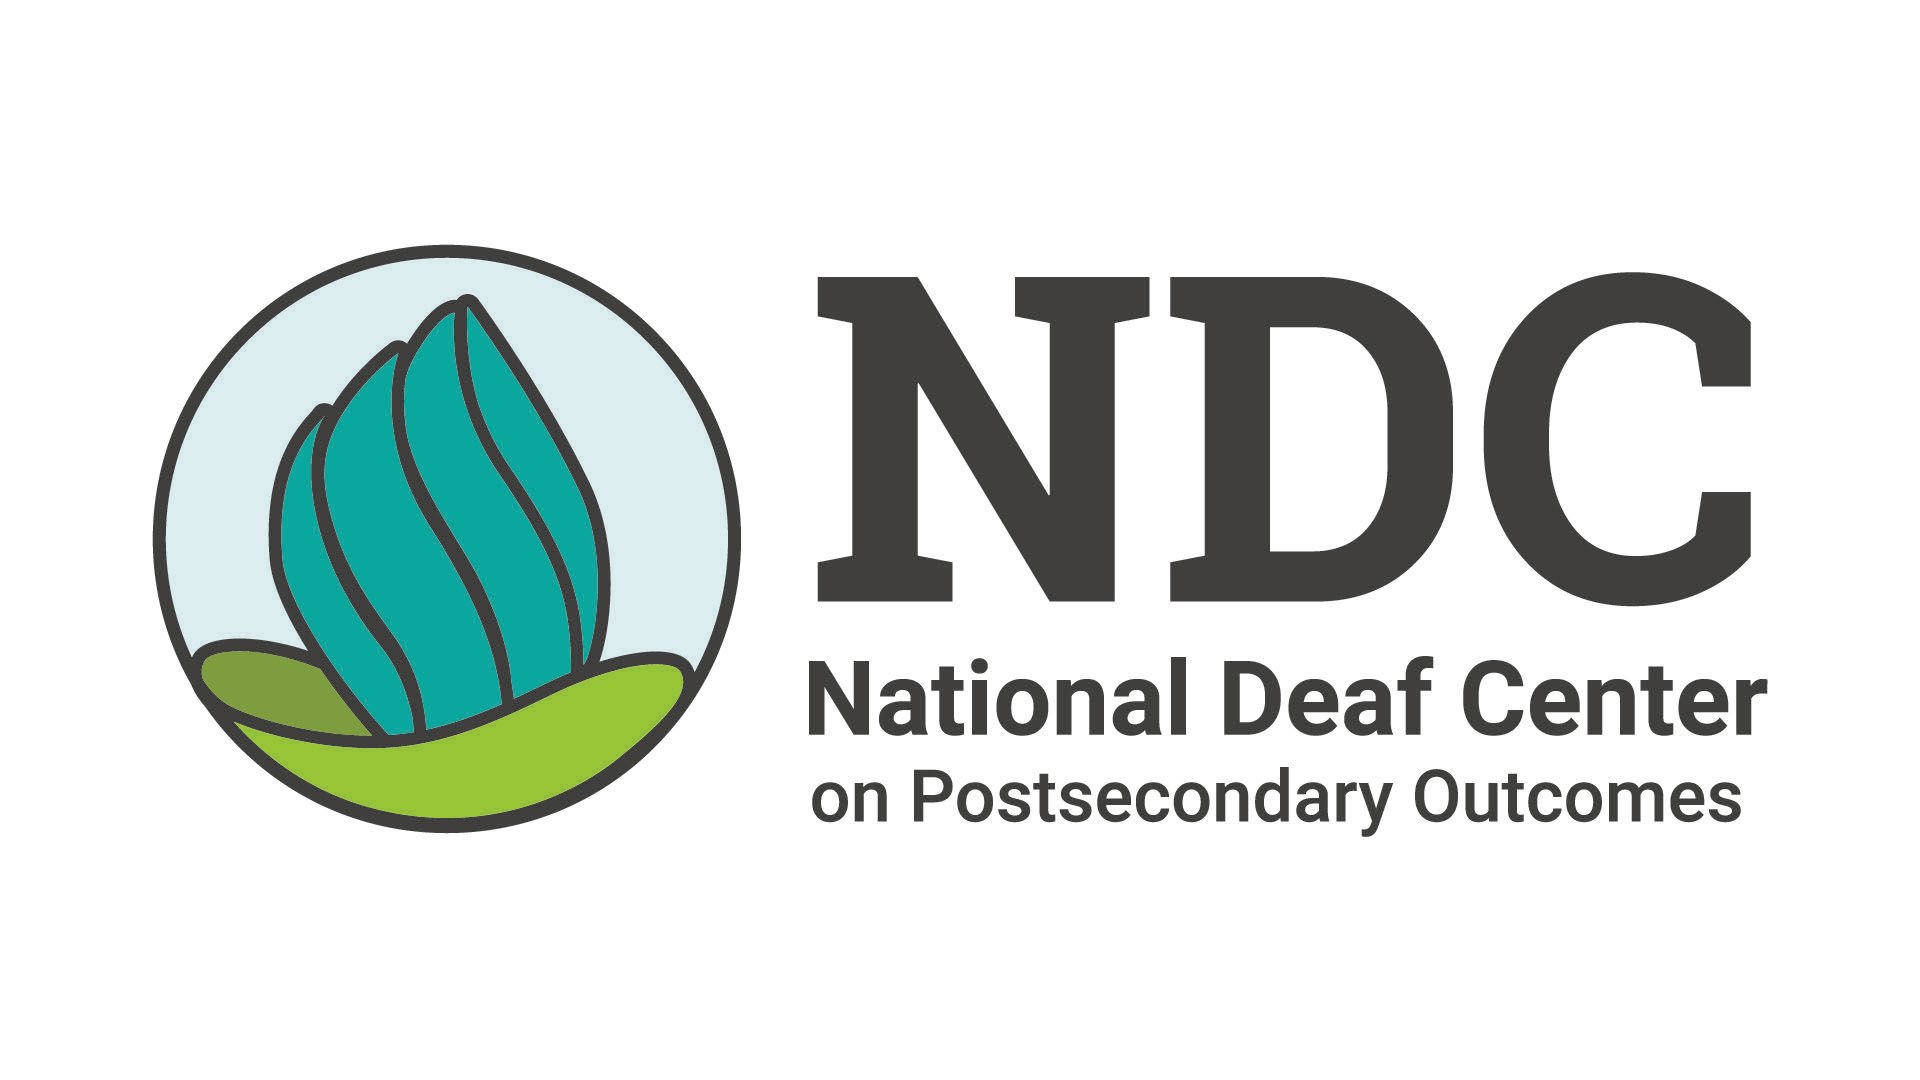 NDC Logo - National Deaf Center. Welcome!